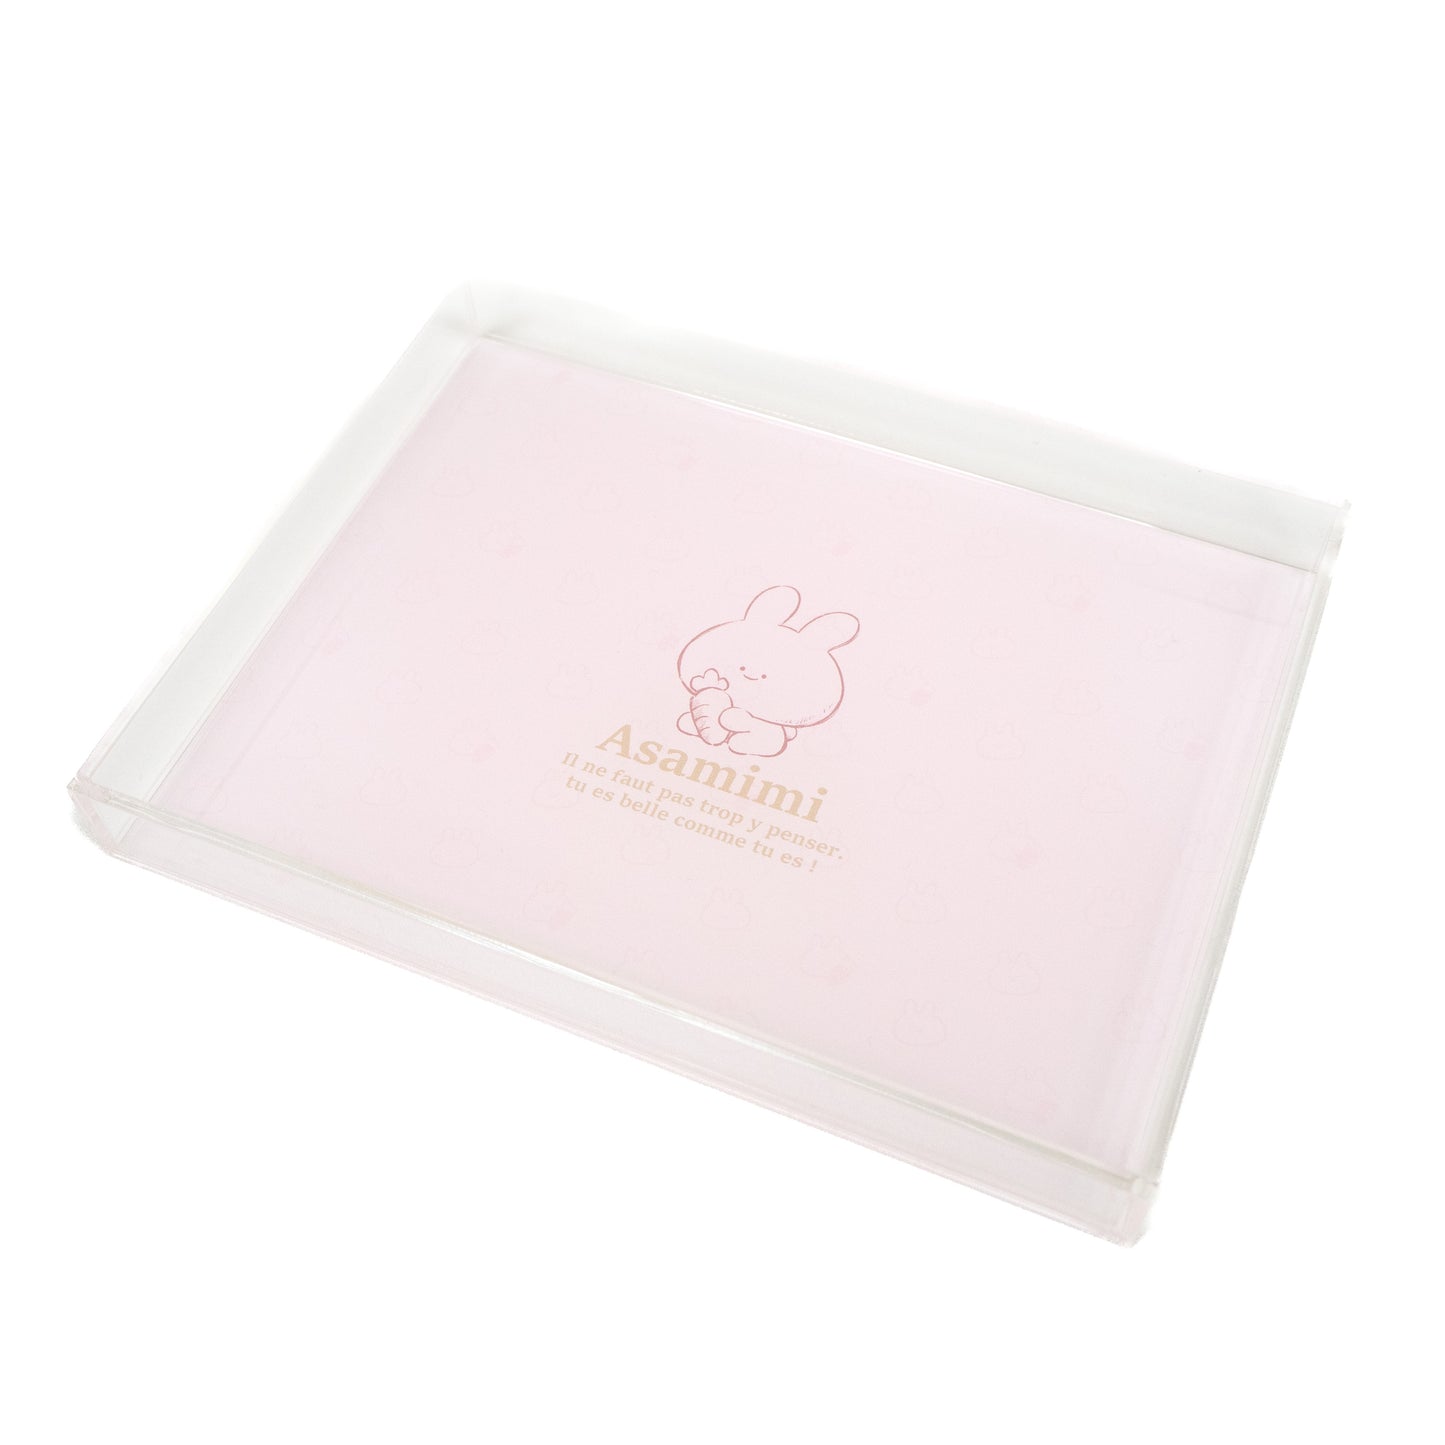 [Asamimi-chan] Acrylic tray (French girly) [shipped in early December]